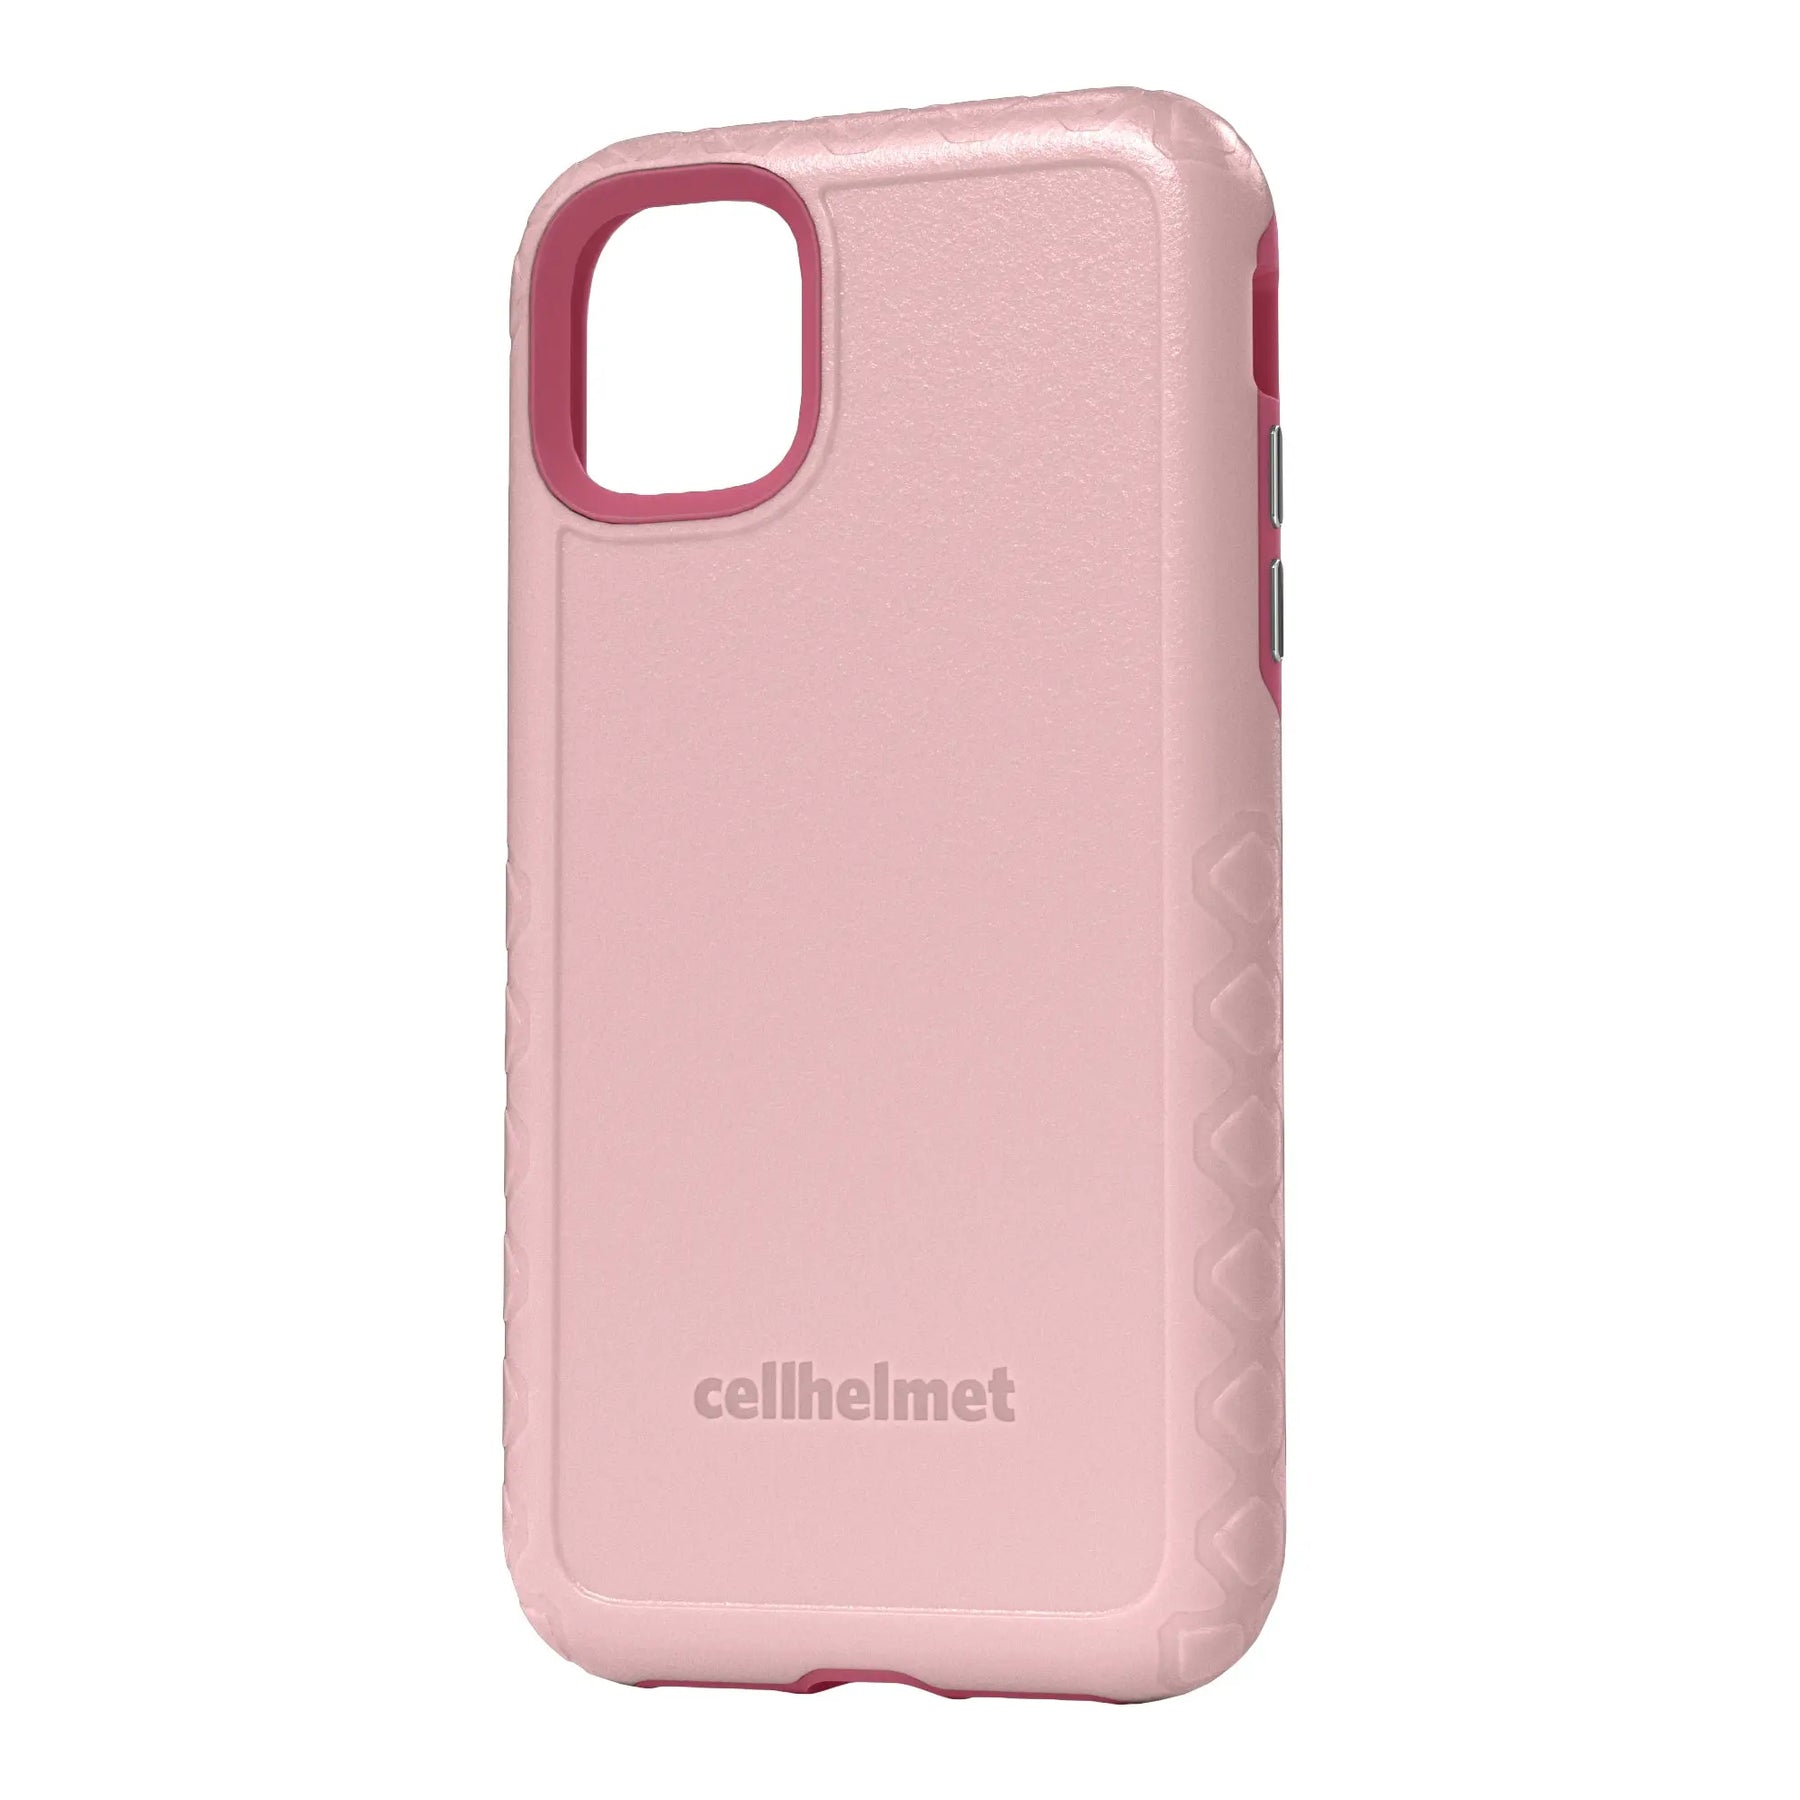 cellhelmet Pink Custom Case for iPhone 11 Pro Max